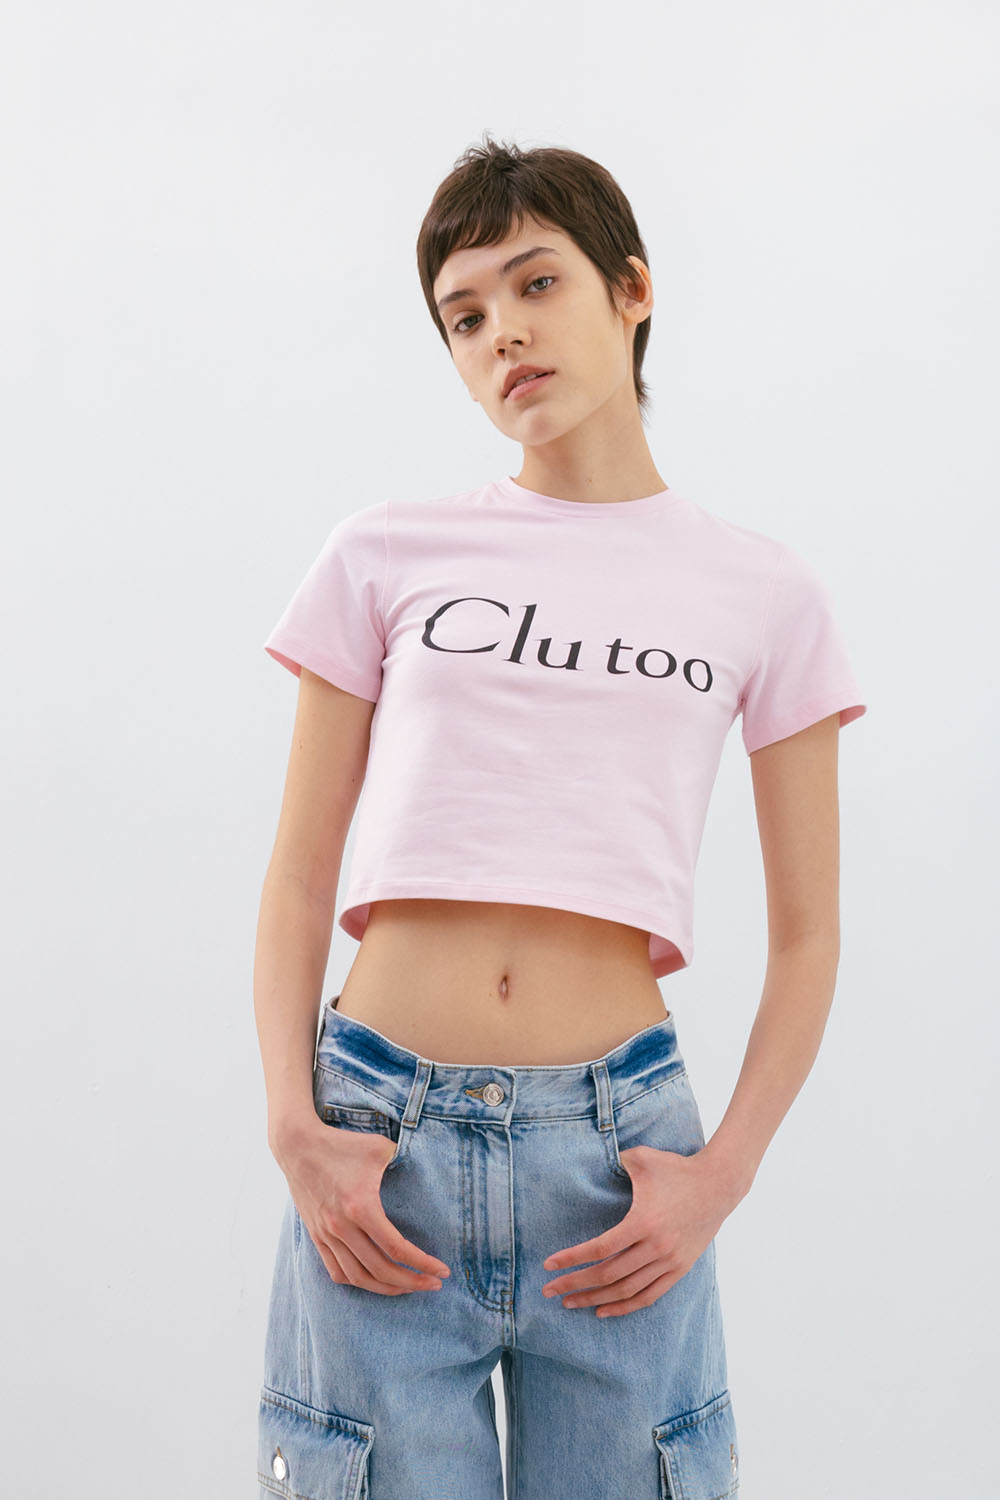 Clu too Crop T-shirt_pink